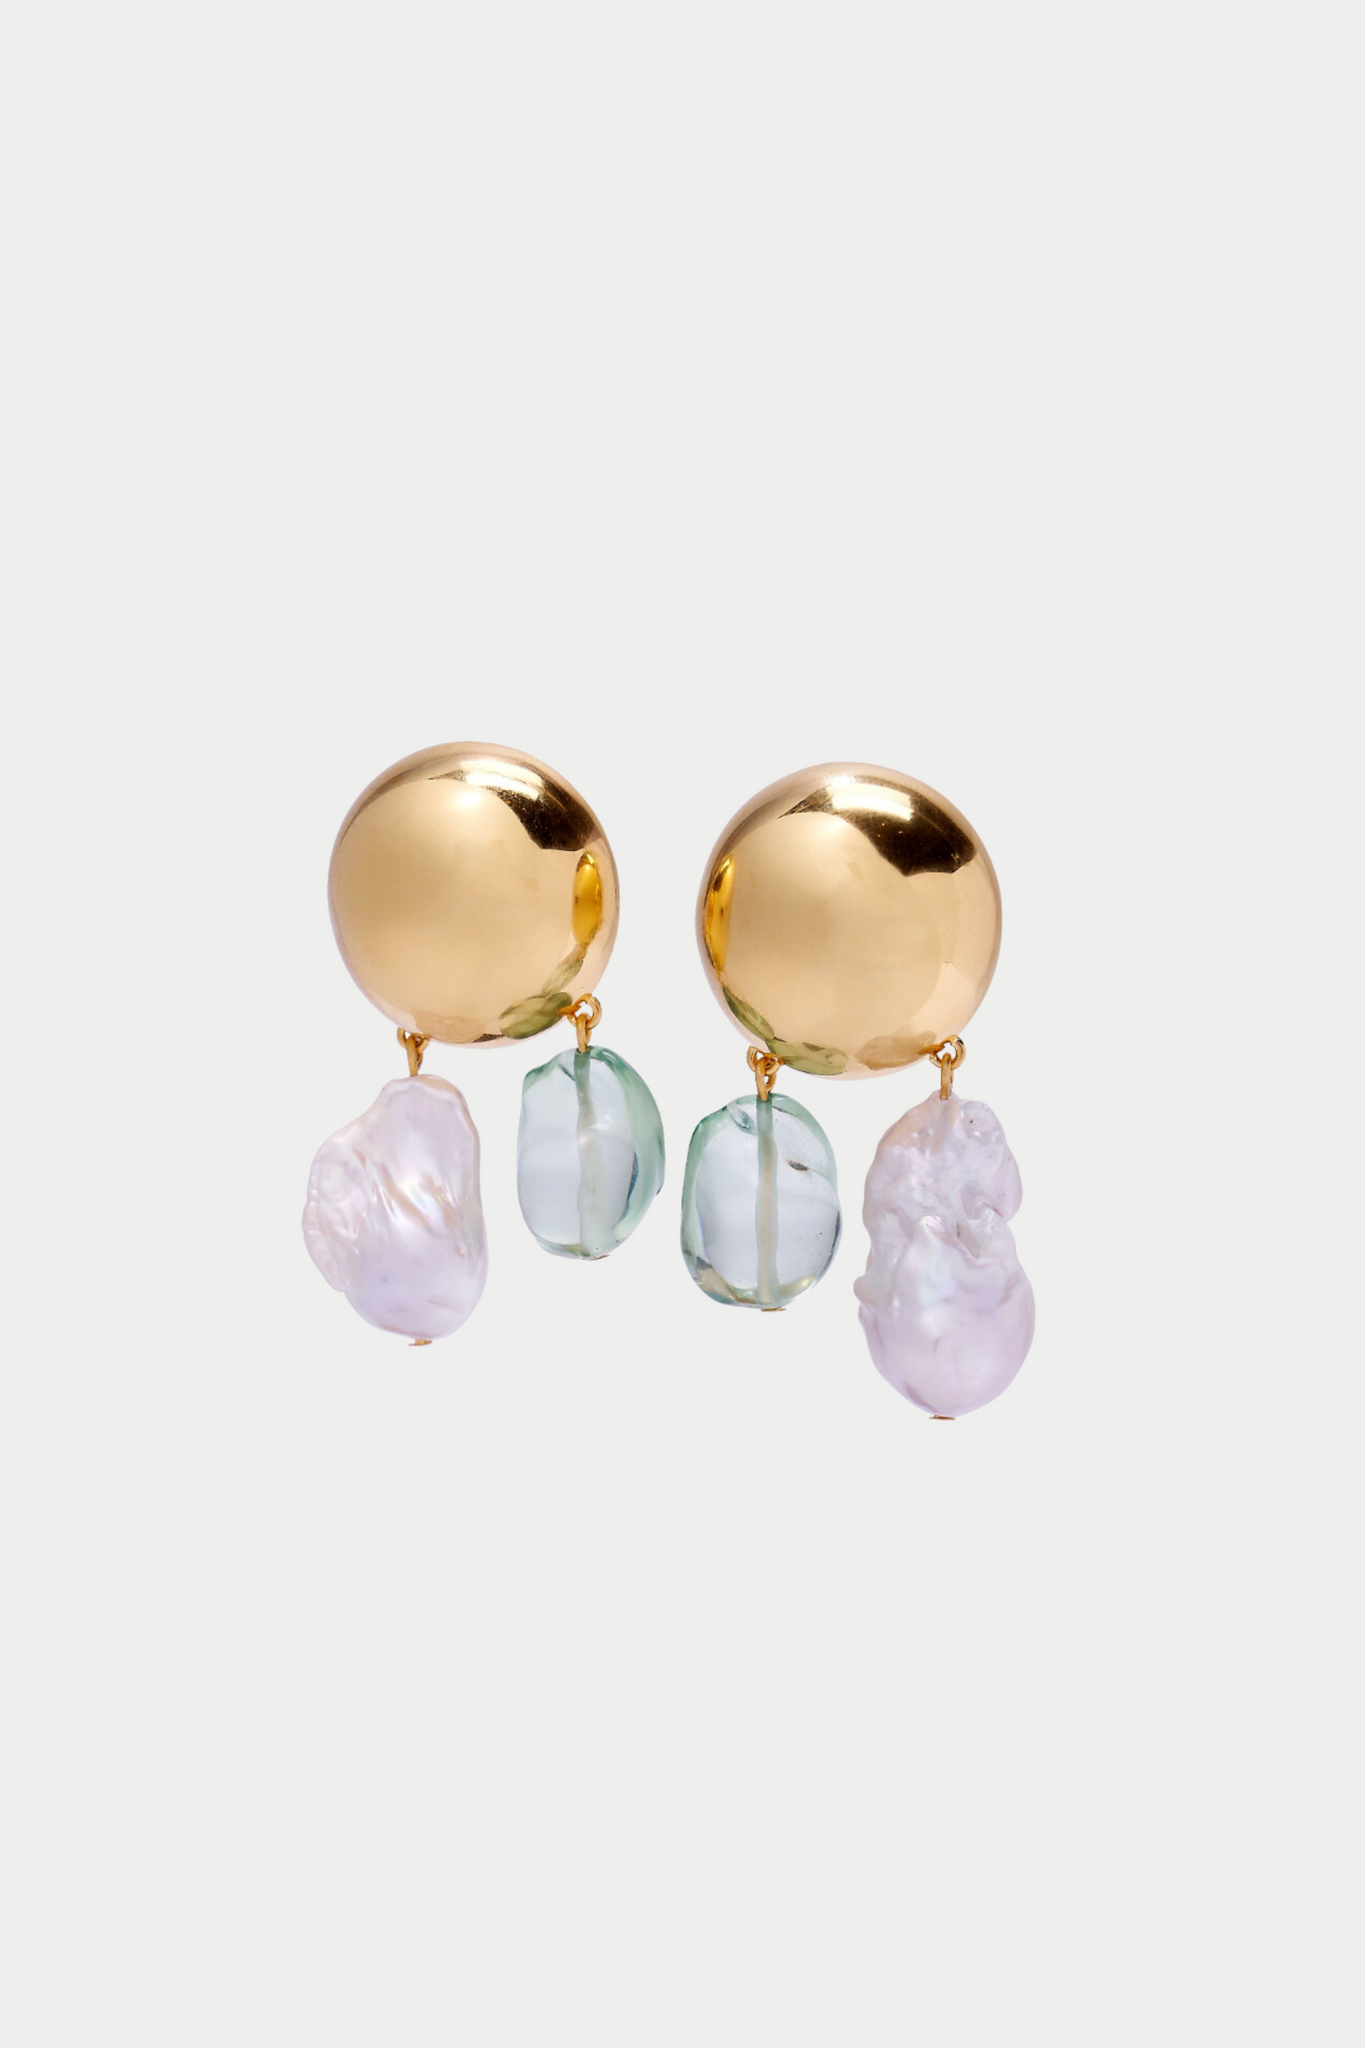 Lizzie Fortunato Jewels - Cascada Earrings, Gold-Plated